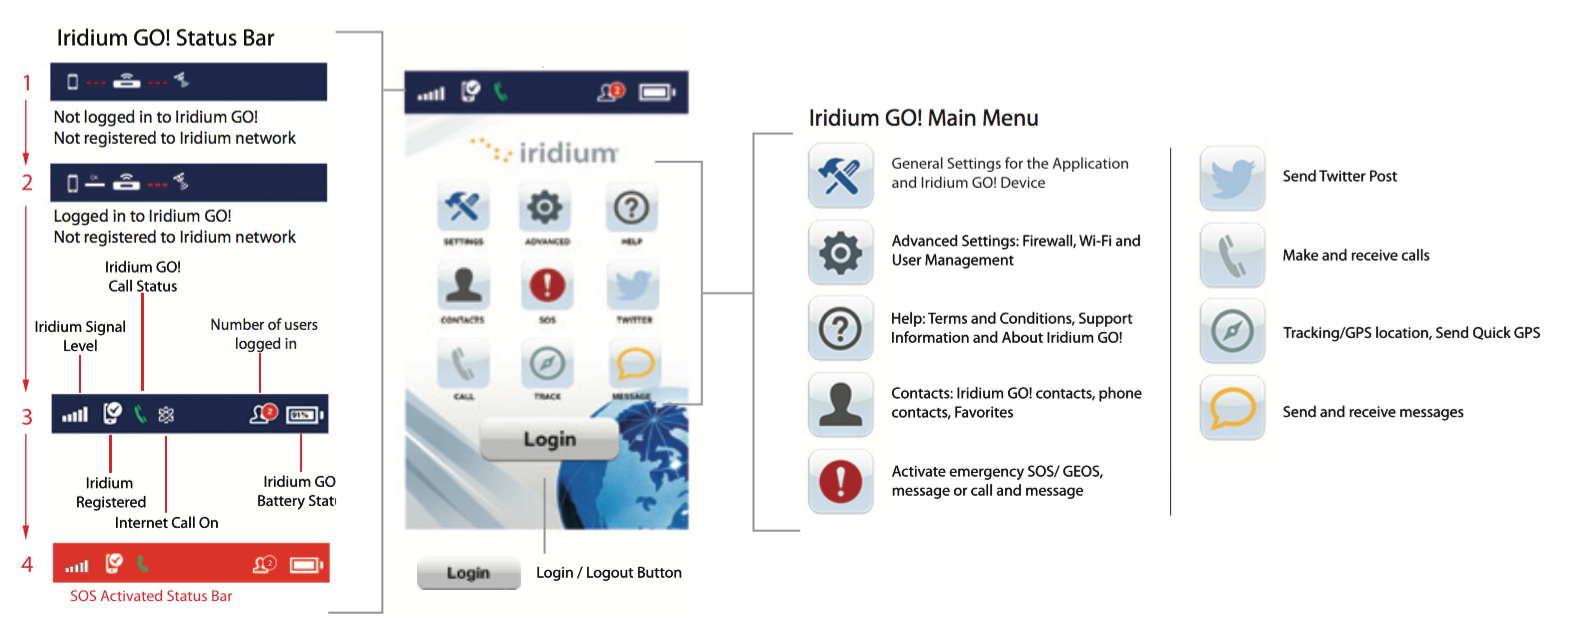 Iridium GO Satellite Hub - App Overview Image